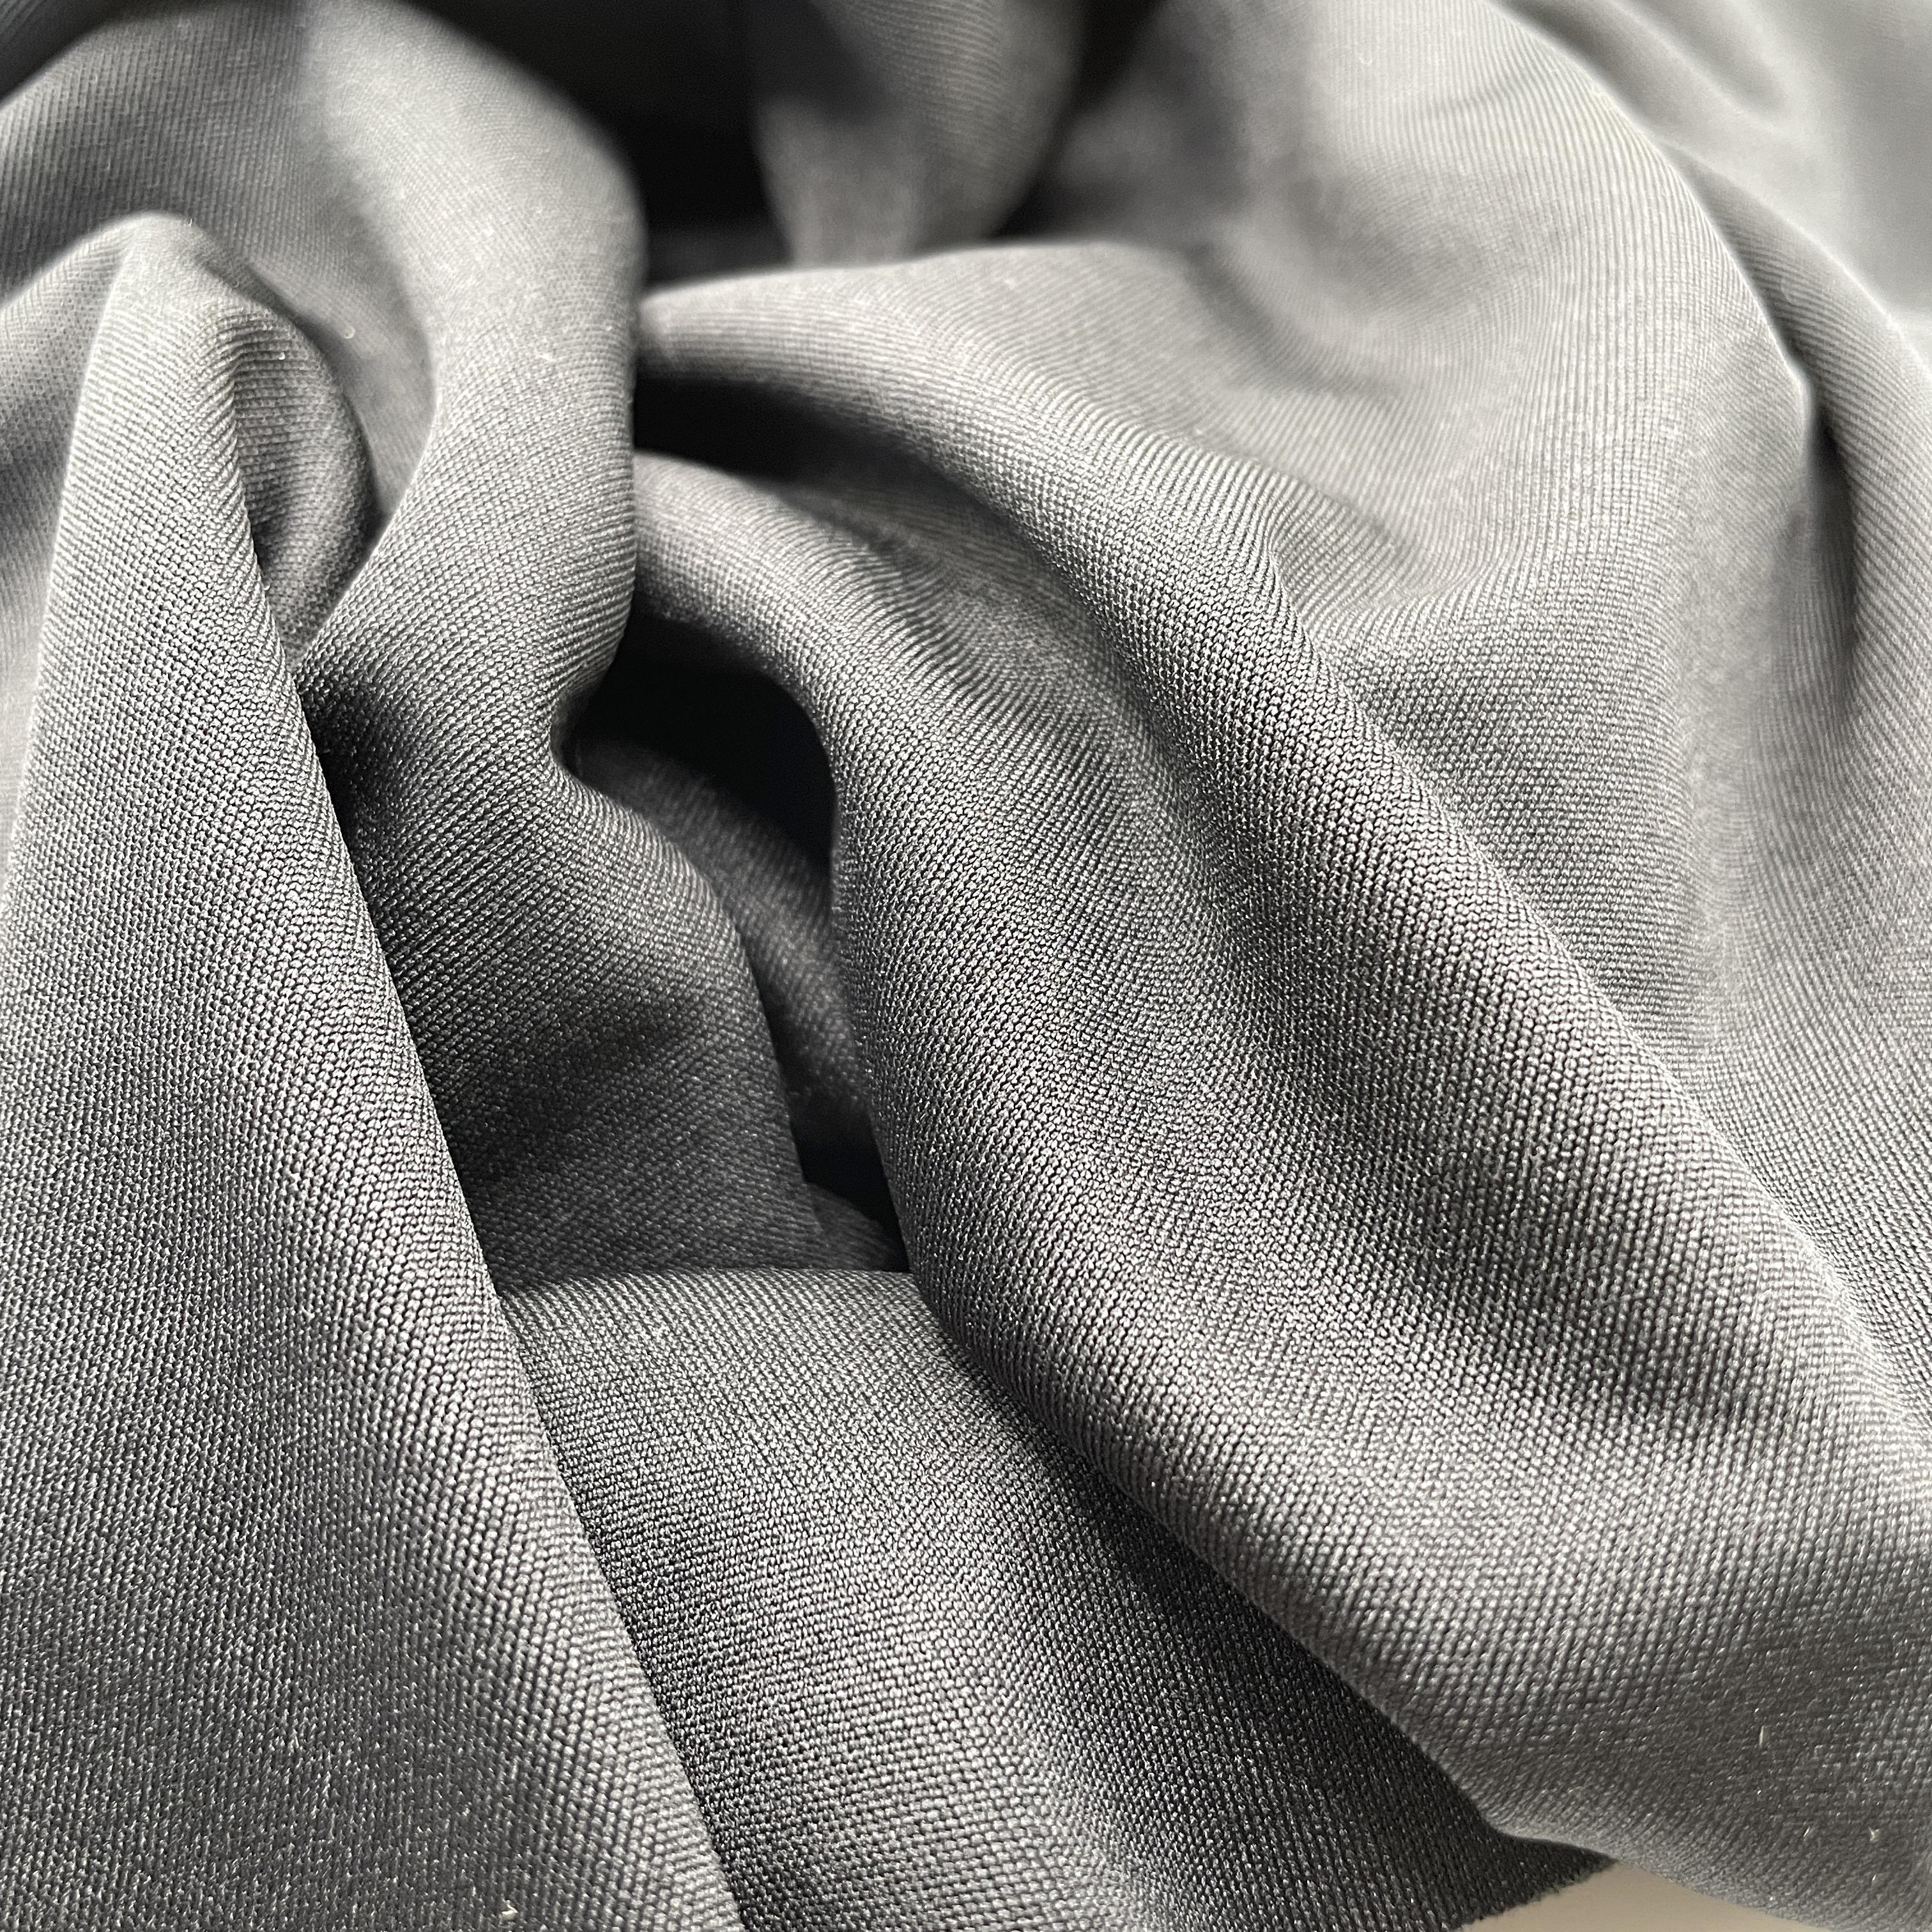 Fabric - Bra/Lingerie Making - Bra Liner/Cup Fabric - Tricot Basic/Toile  170gsm - Soft Plain Matt - BLACK, per piece